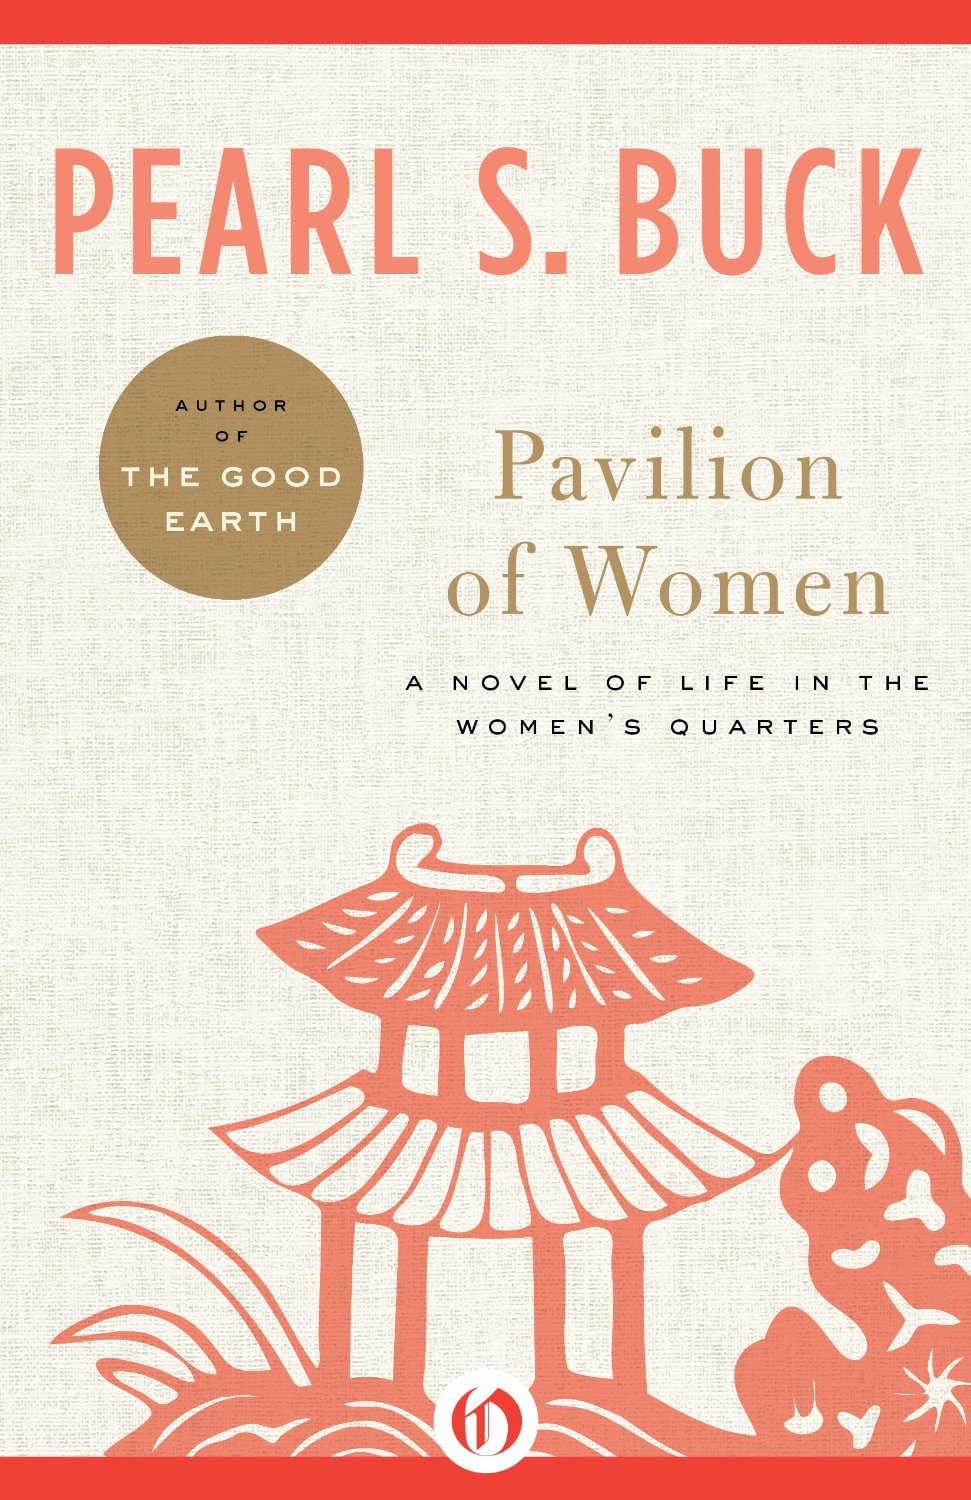 Pavilion of Women